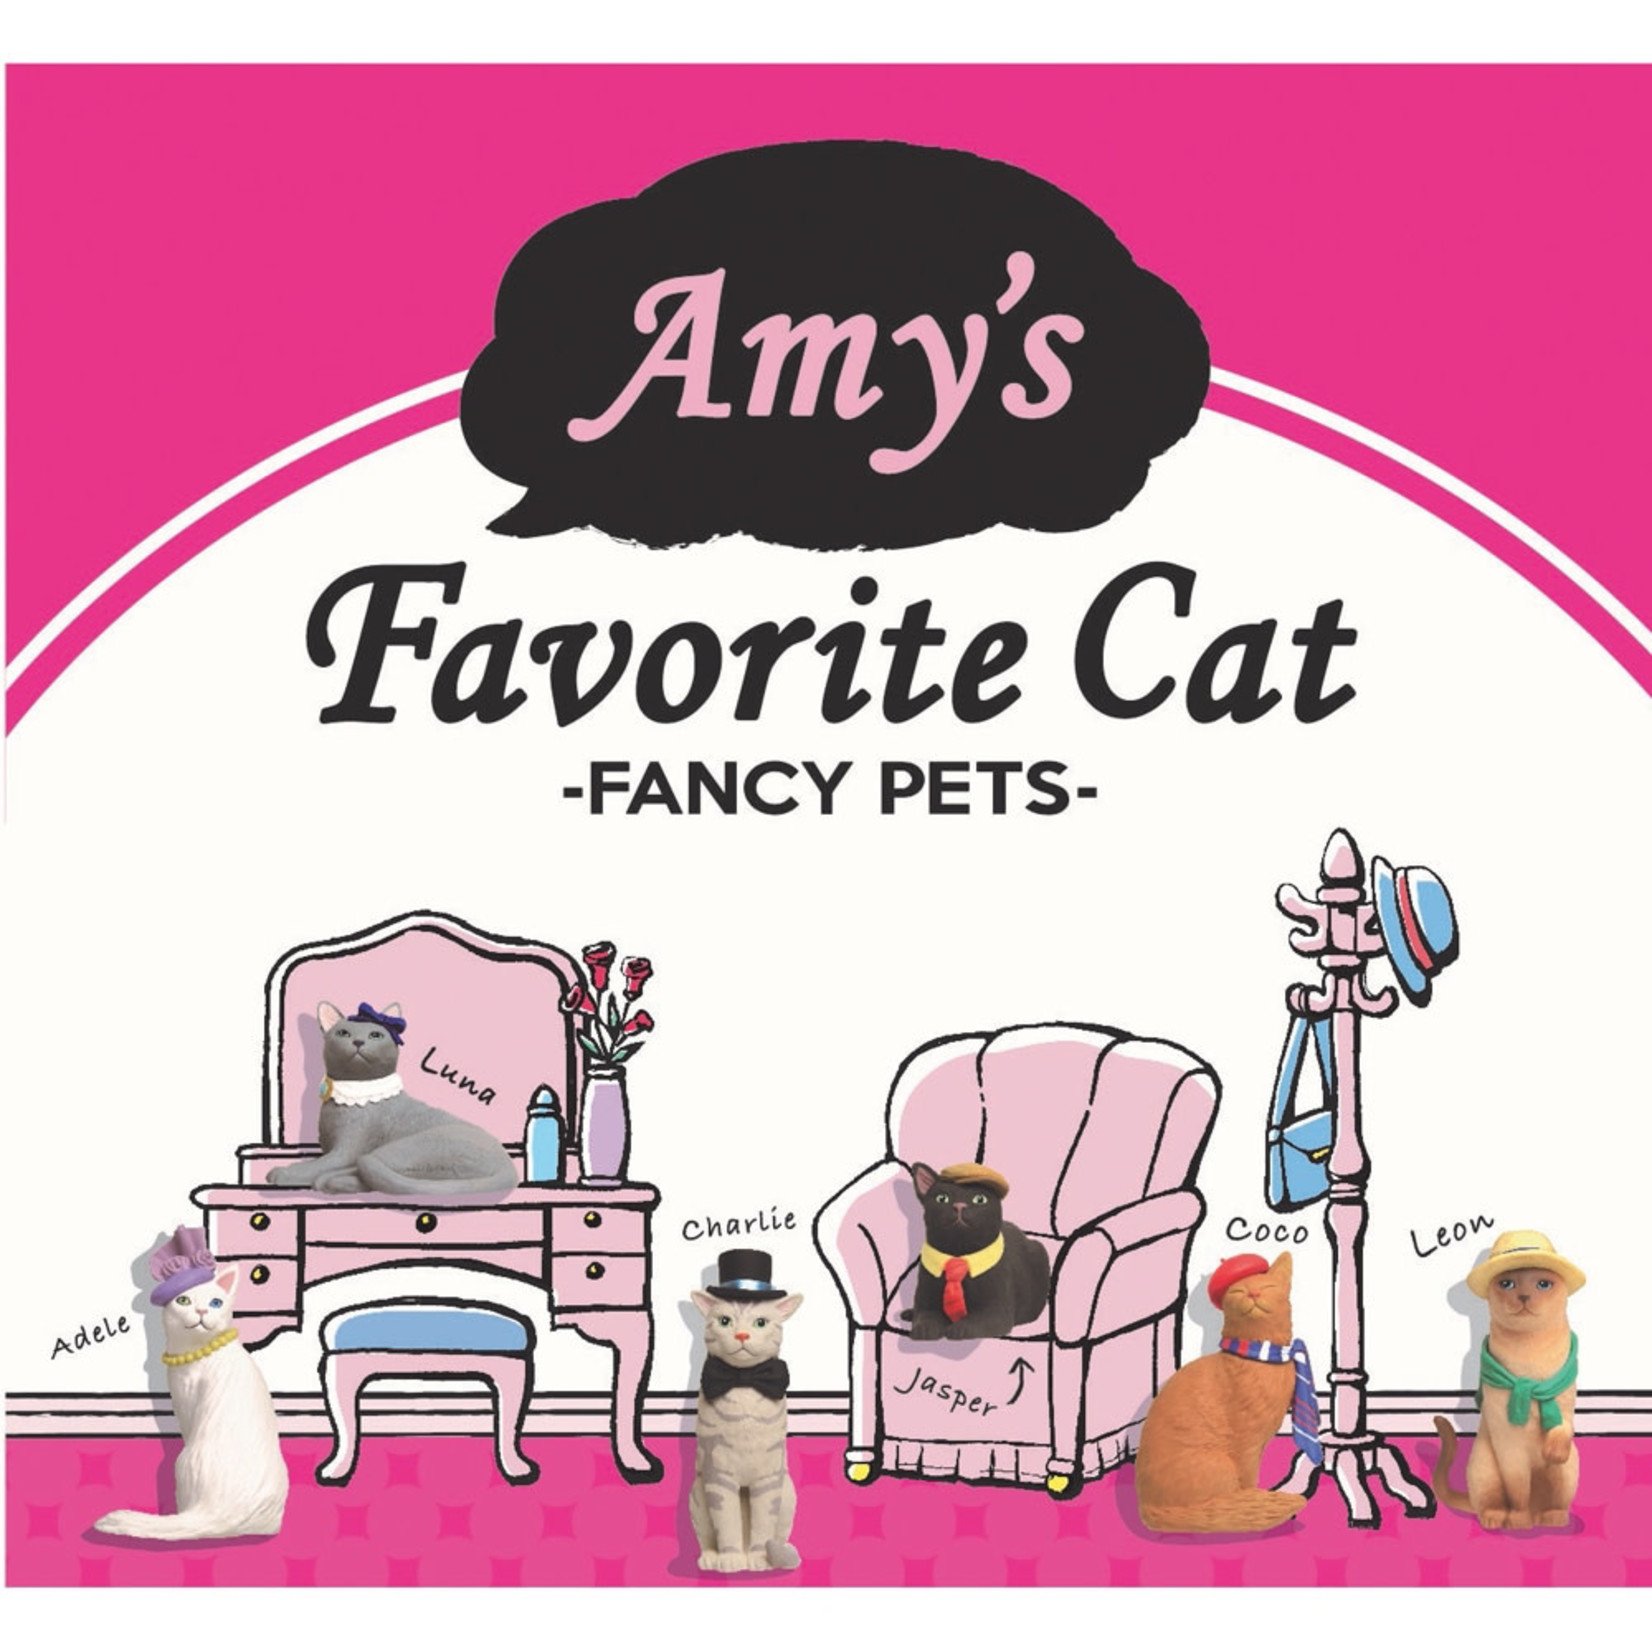 Dreams Fancy Pets - Amy's Favorite Cat